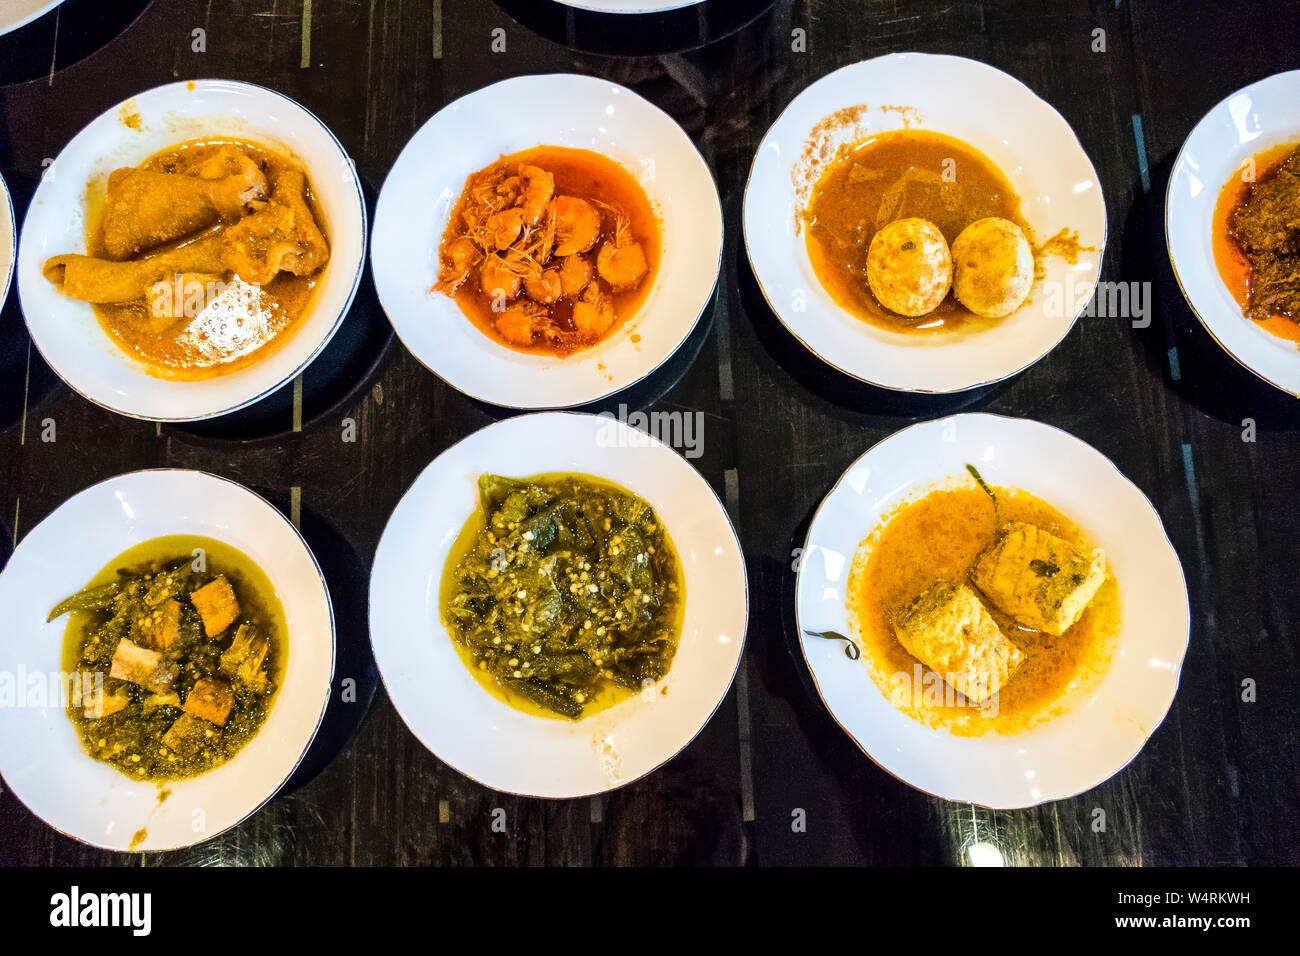 Various meals on plates, Nusa Dua, Bali, Indonesia Stock Photo